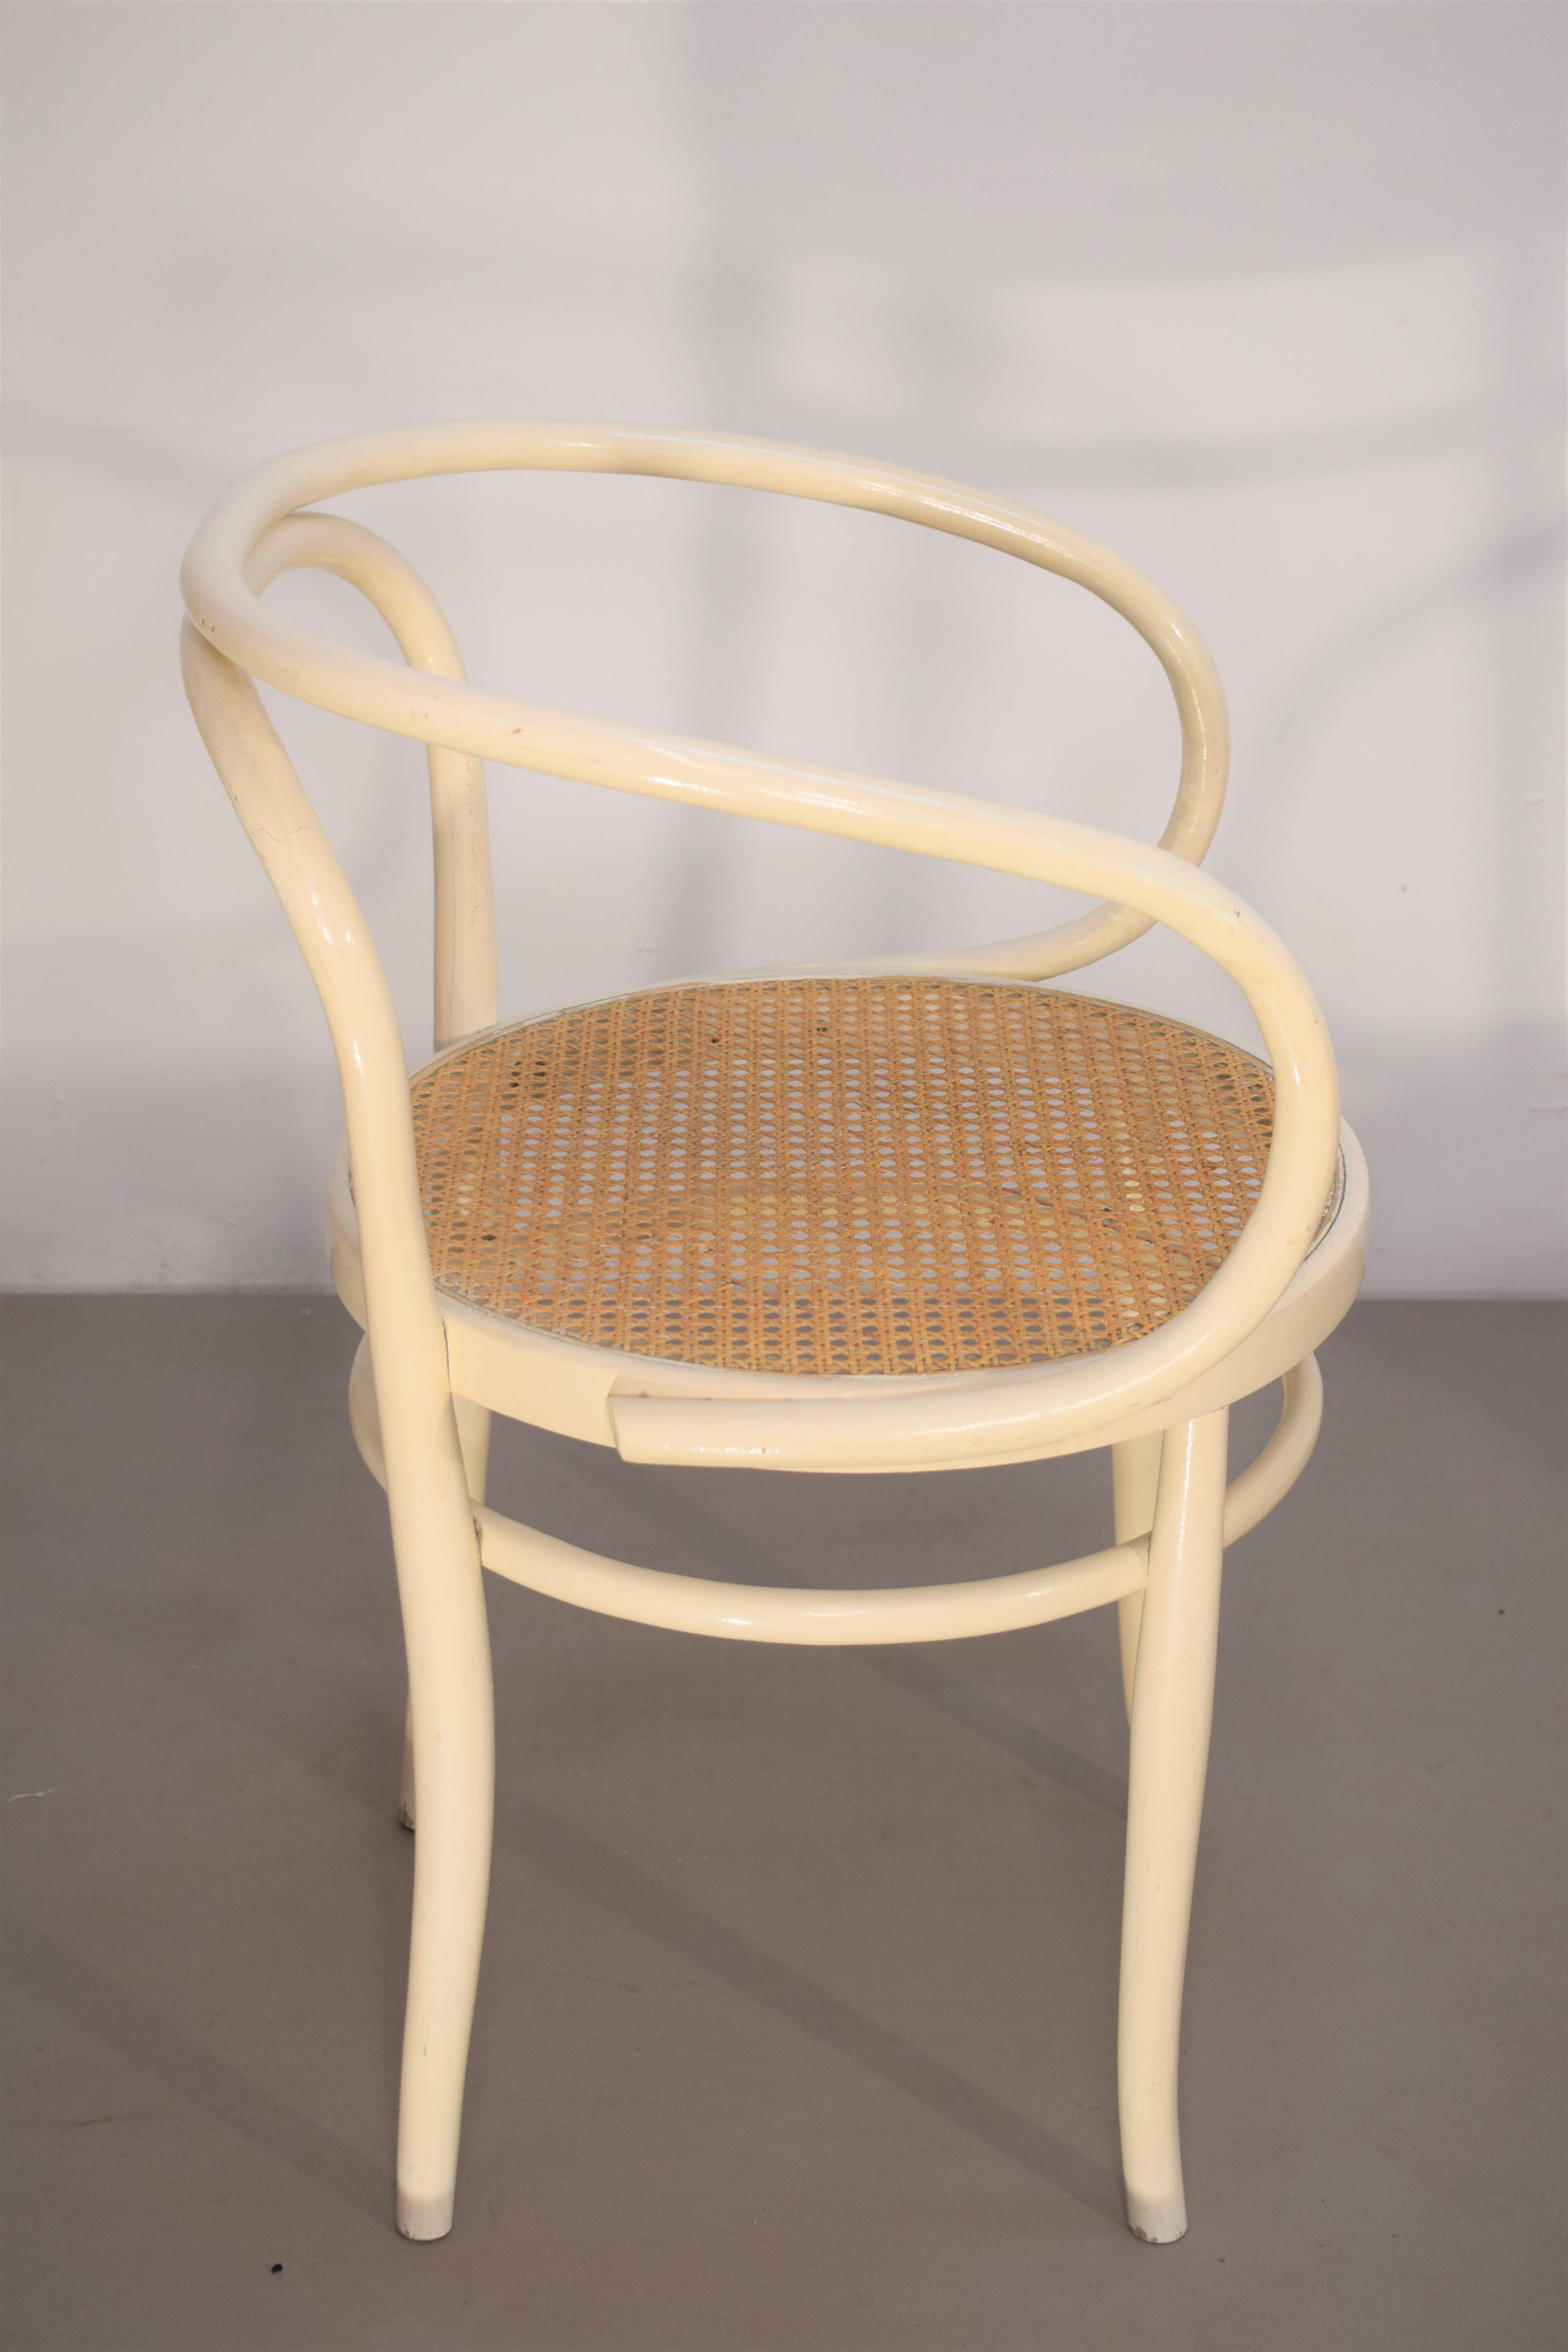 Pair of Thonet armchairs, Italy, 1960s.

Dimensions: H= 75 cm; W= 52 cm; D= 48 cm; H seat= 47 cm.